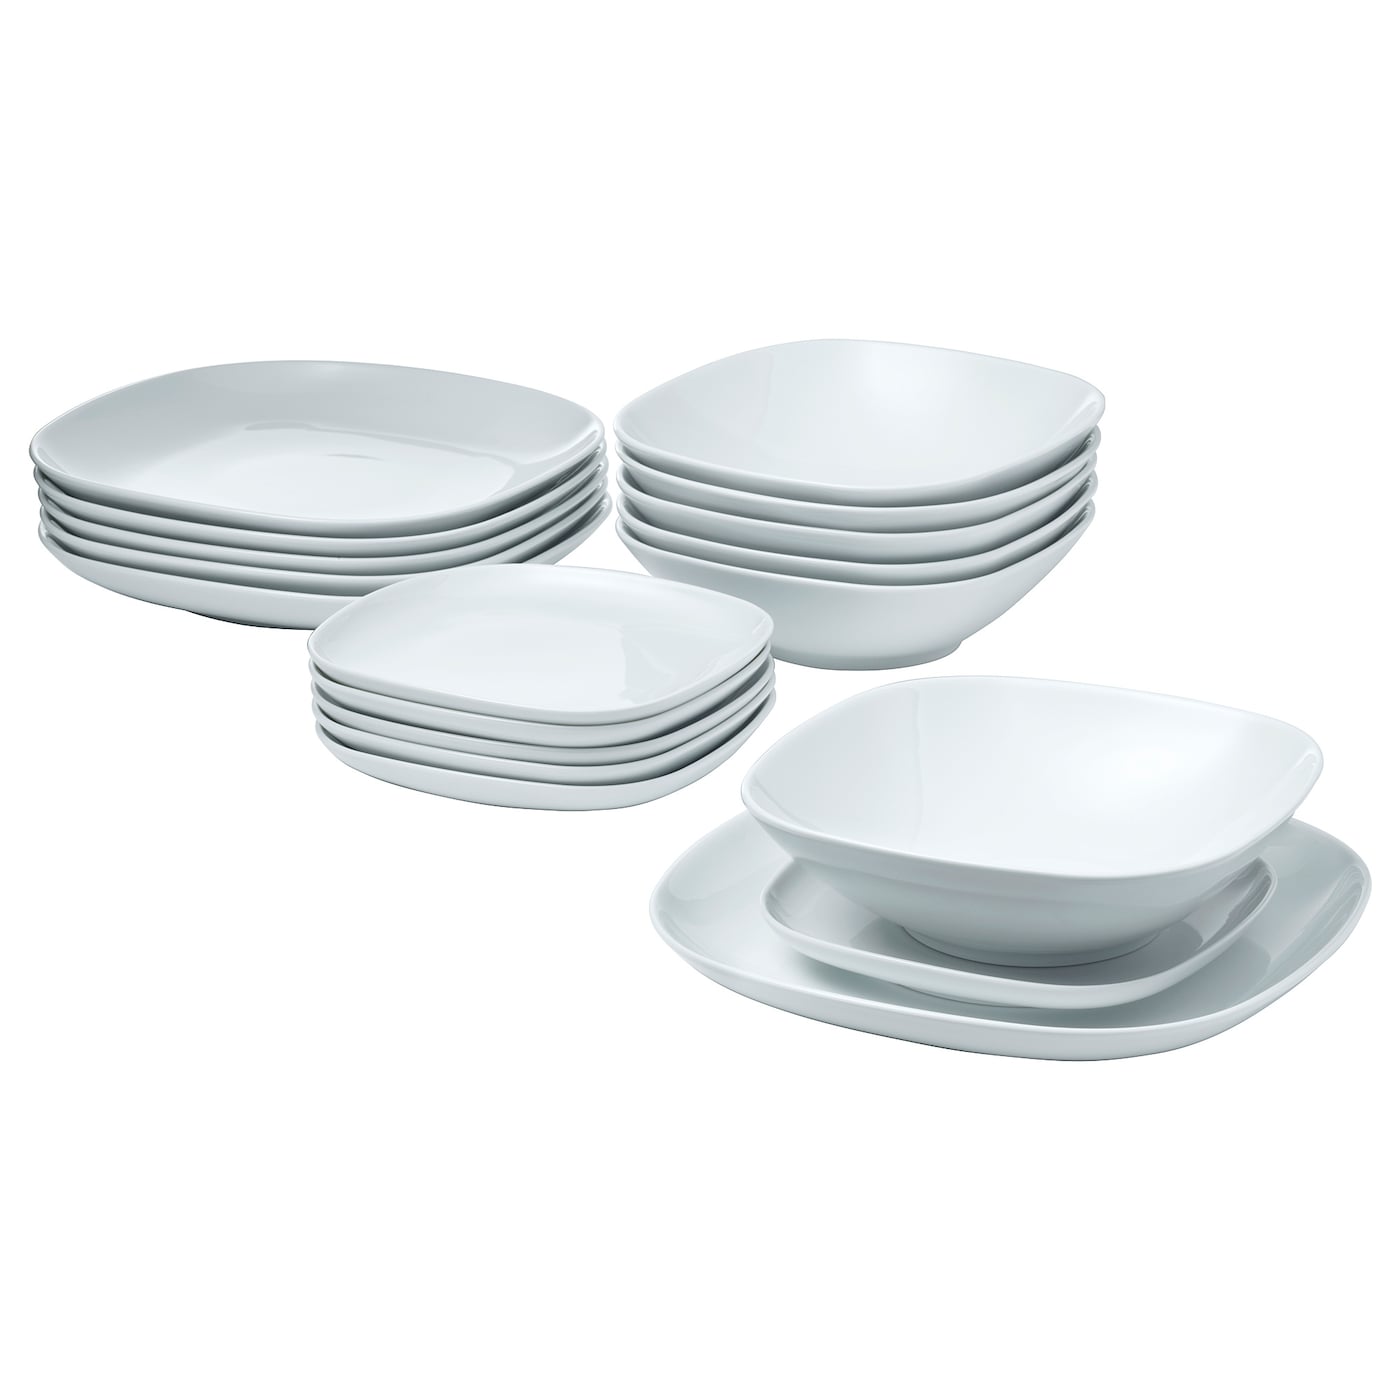 UPPLAGA 18-piece dinnerware set, white - IKEA